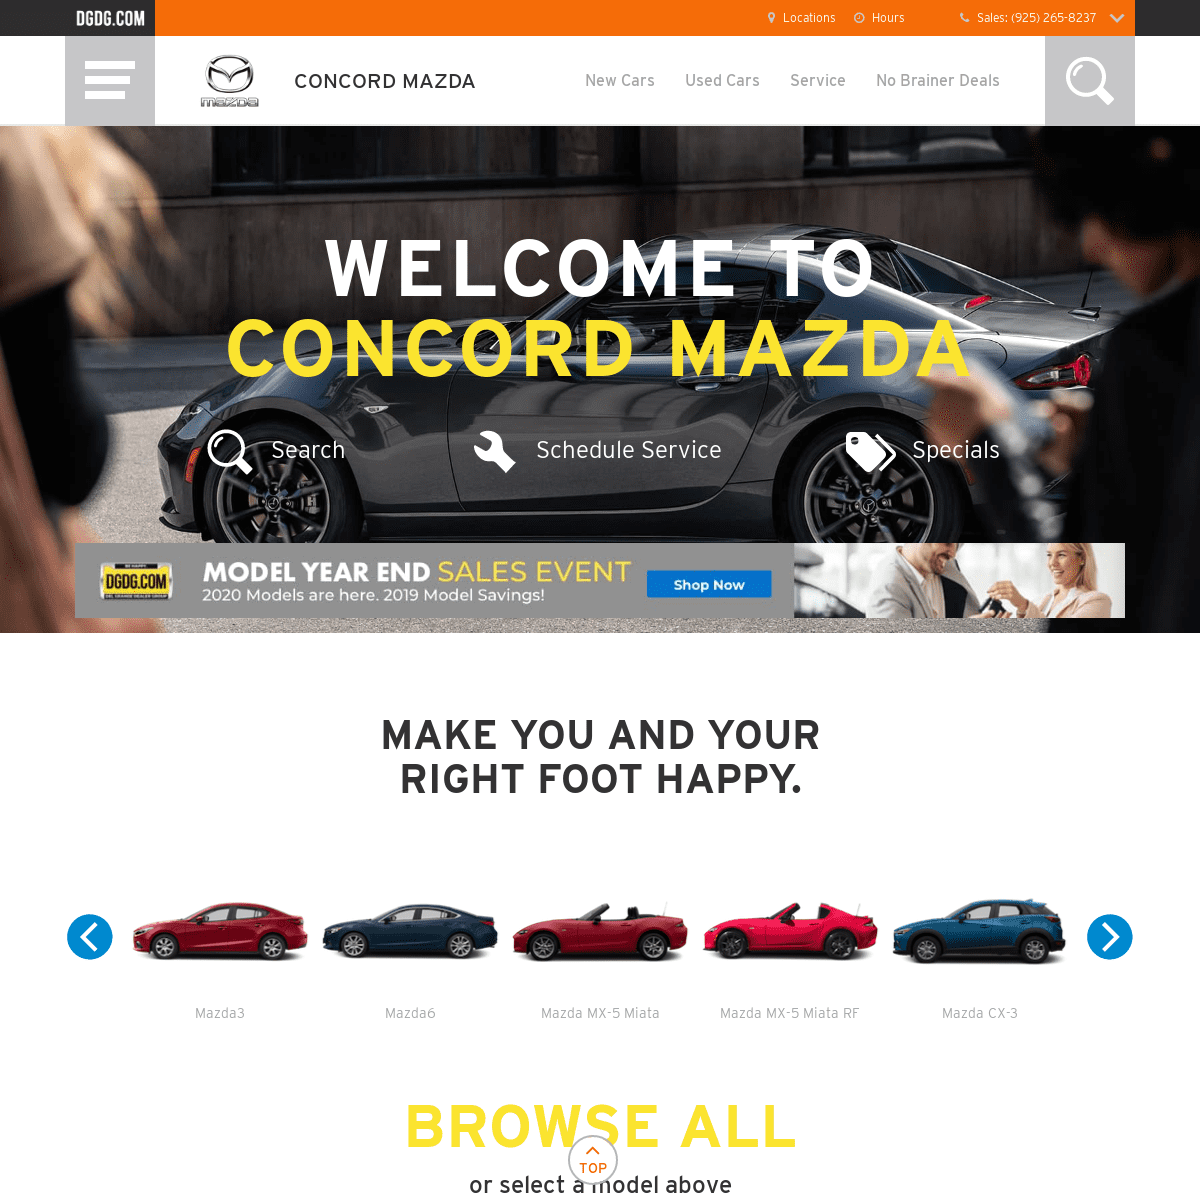 Concord Mazda | East Bay Area Mazda Dealership in Concord, CA.